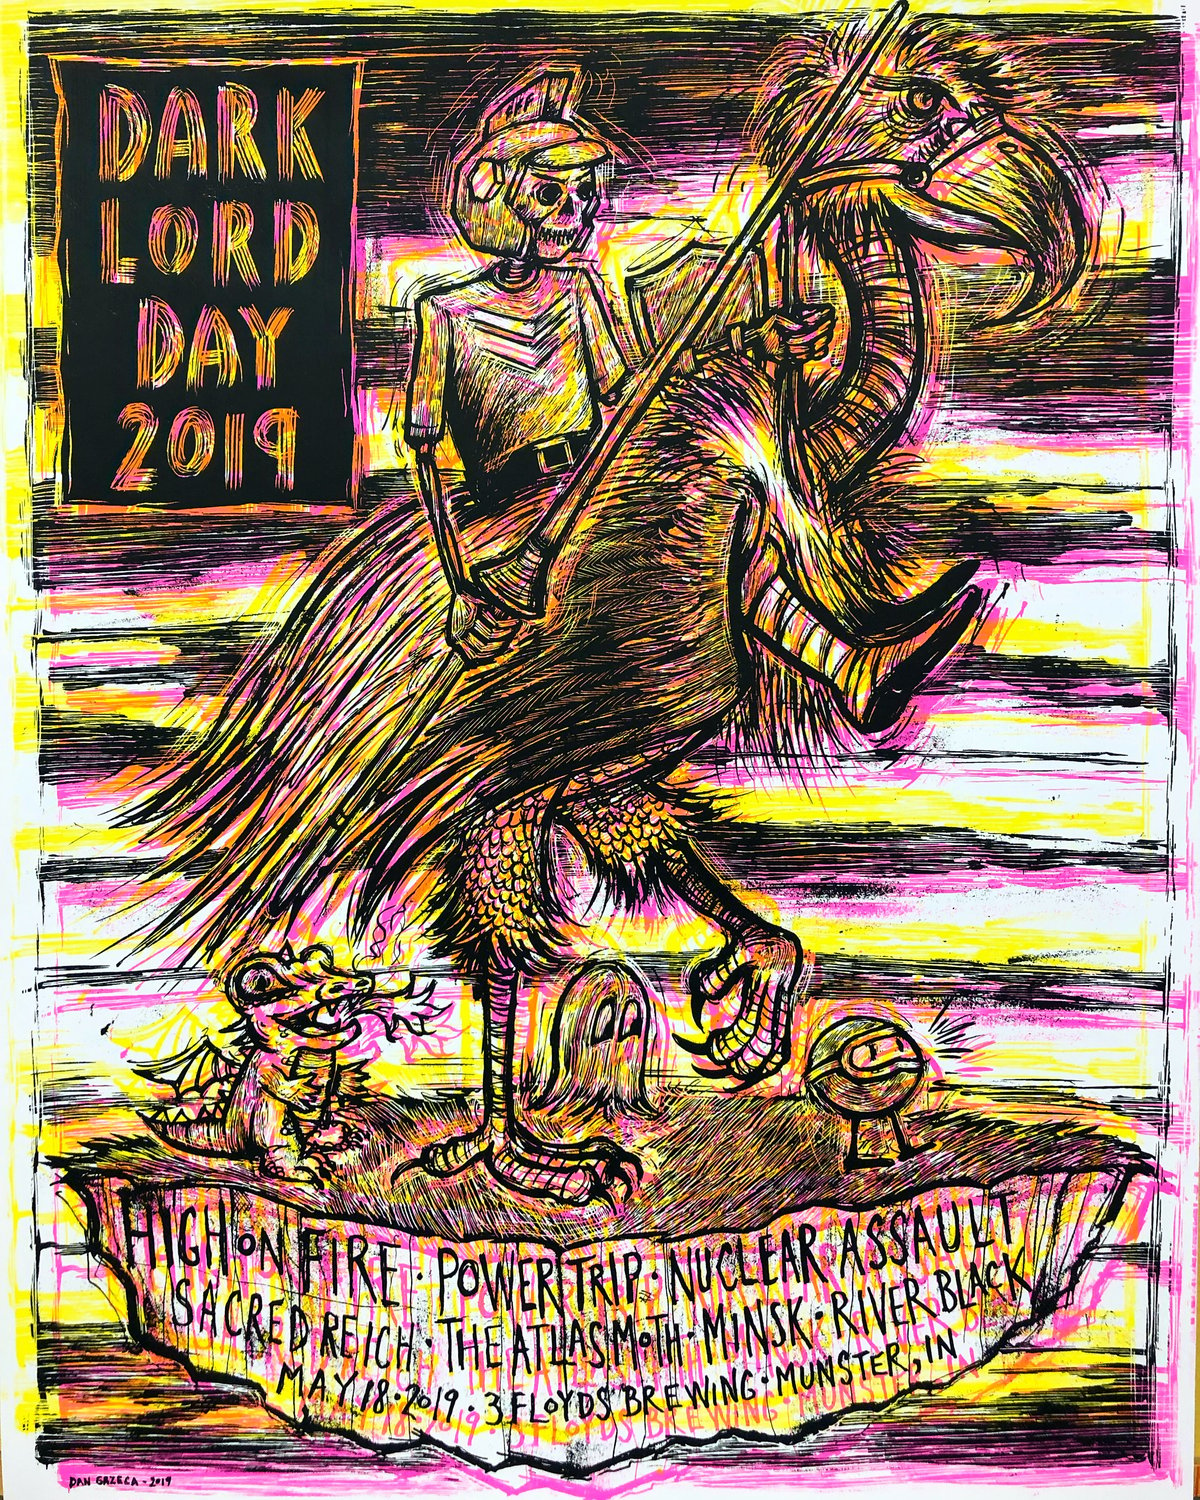 2019 Dark Lord Day poster Ground Up Press Artwork by Dan Grzeca